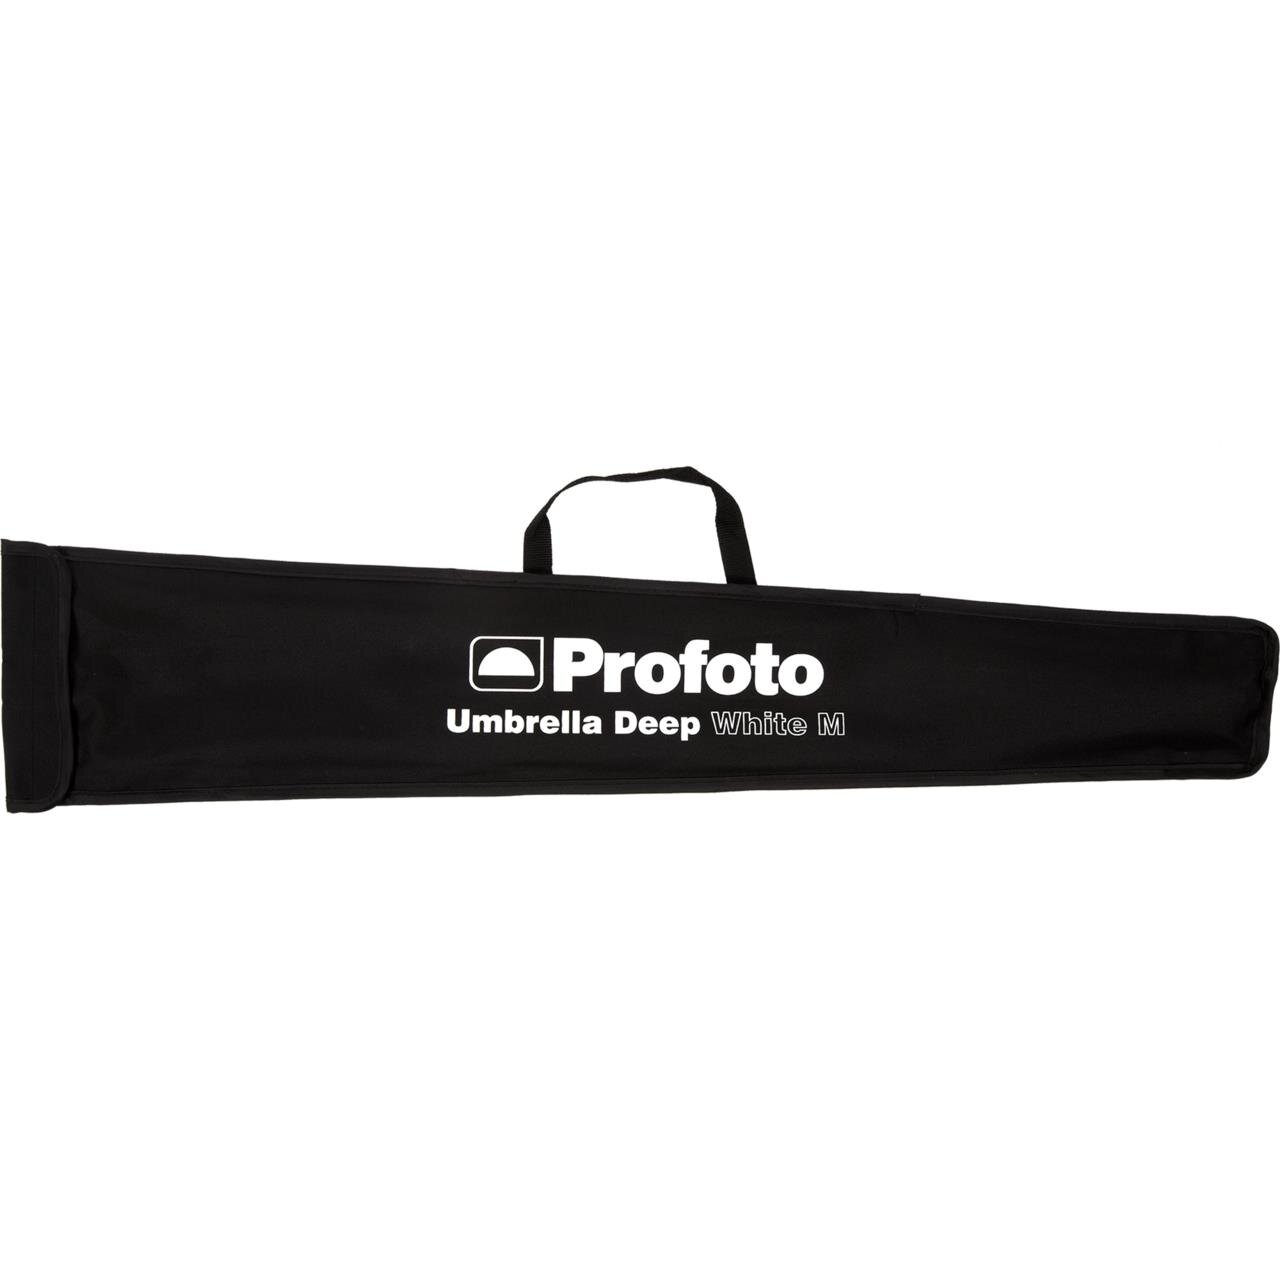 100986_f_Profoto-Umbrella-Deep-White-M-bag_ProductImage.png.jpeg